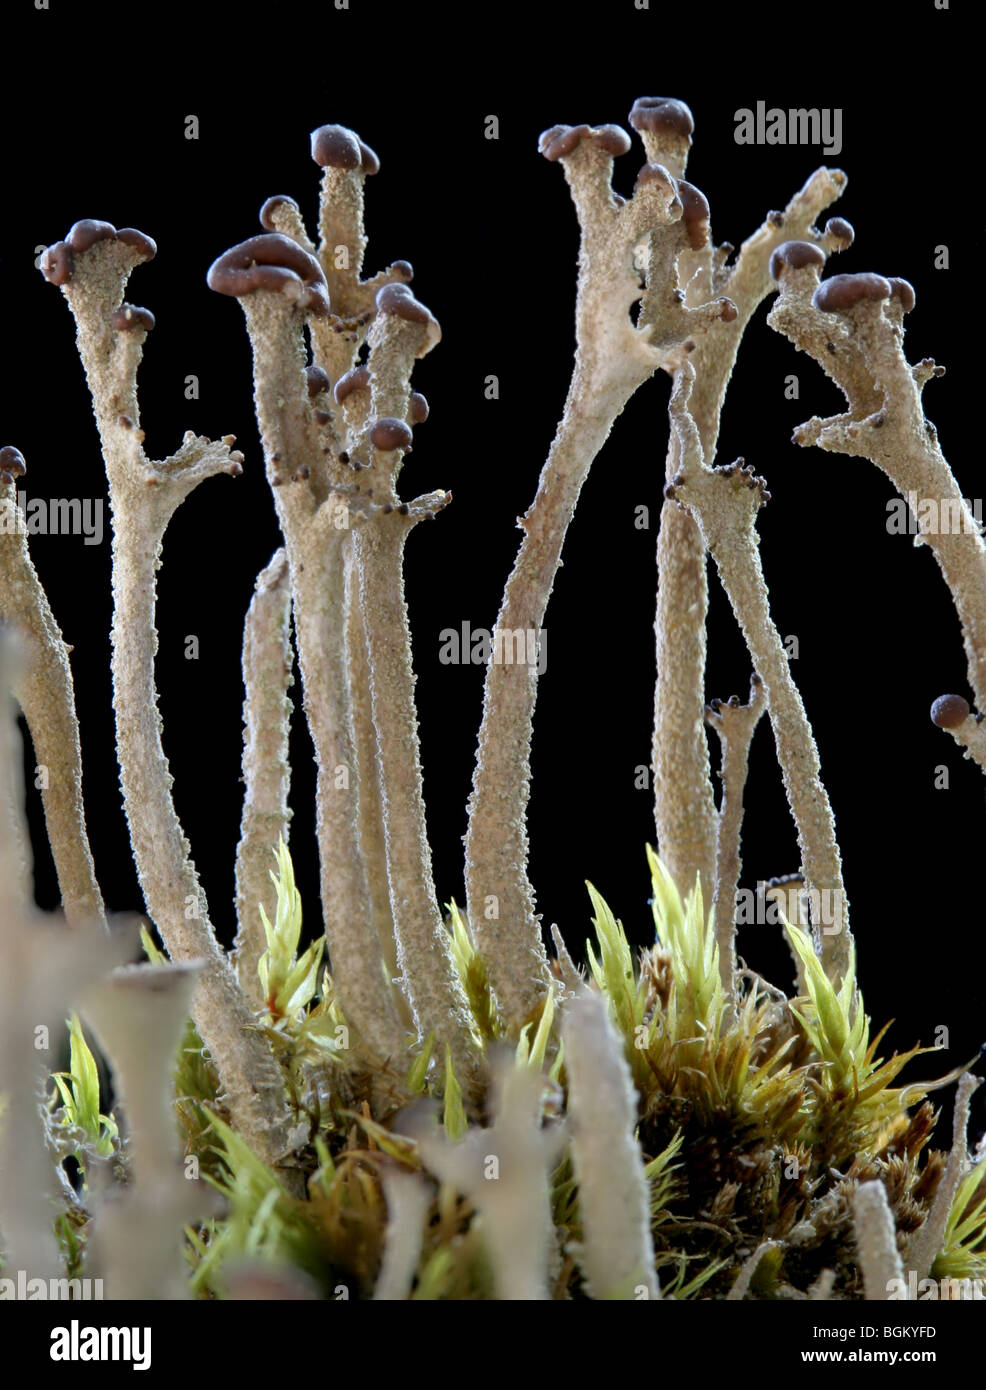 Fruticose lichen, Cladonia sp., growing among mosses. Stock Photo